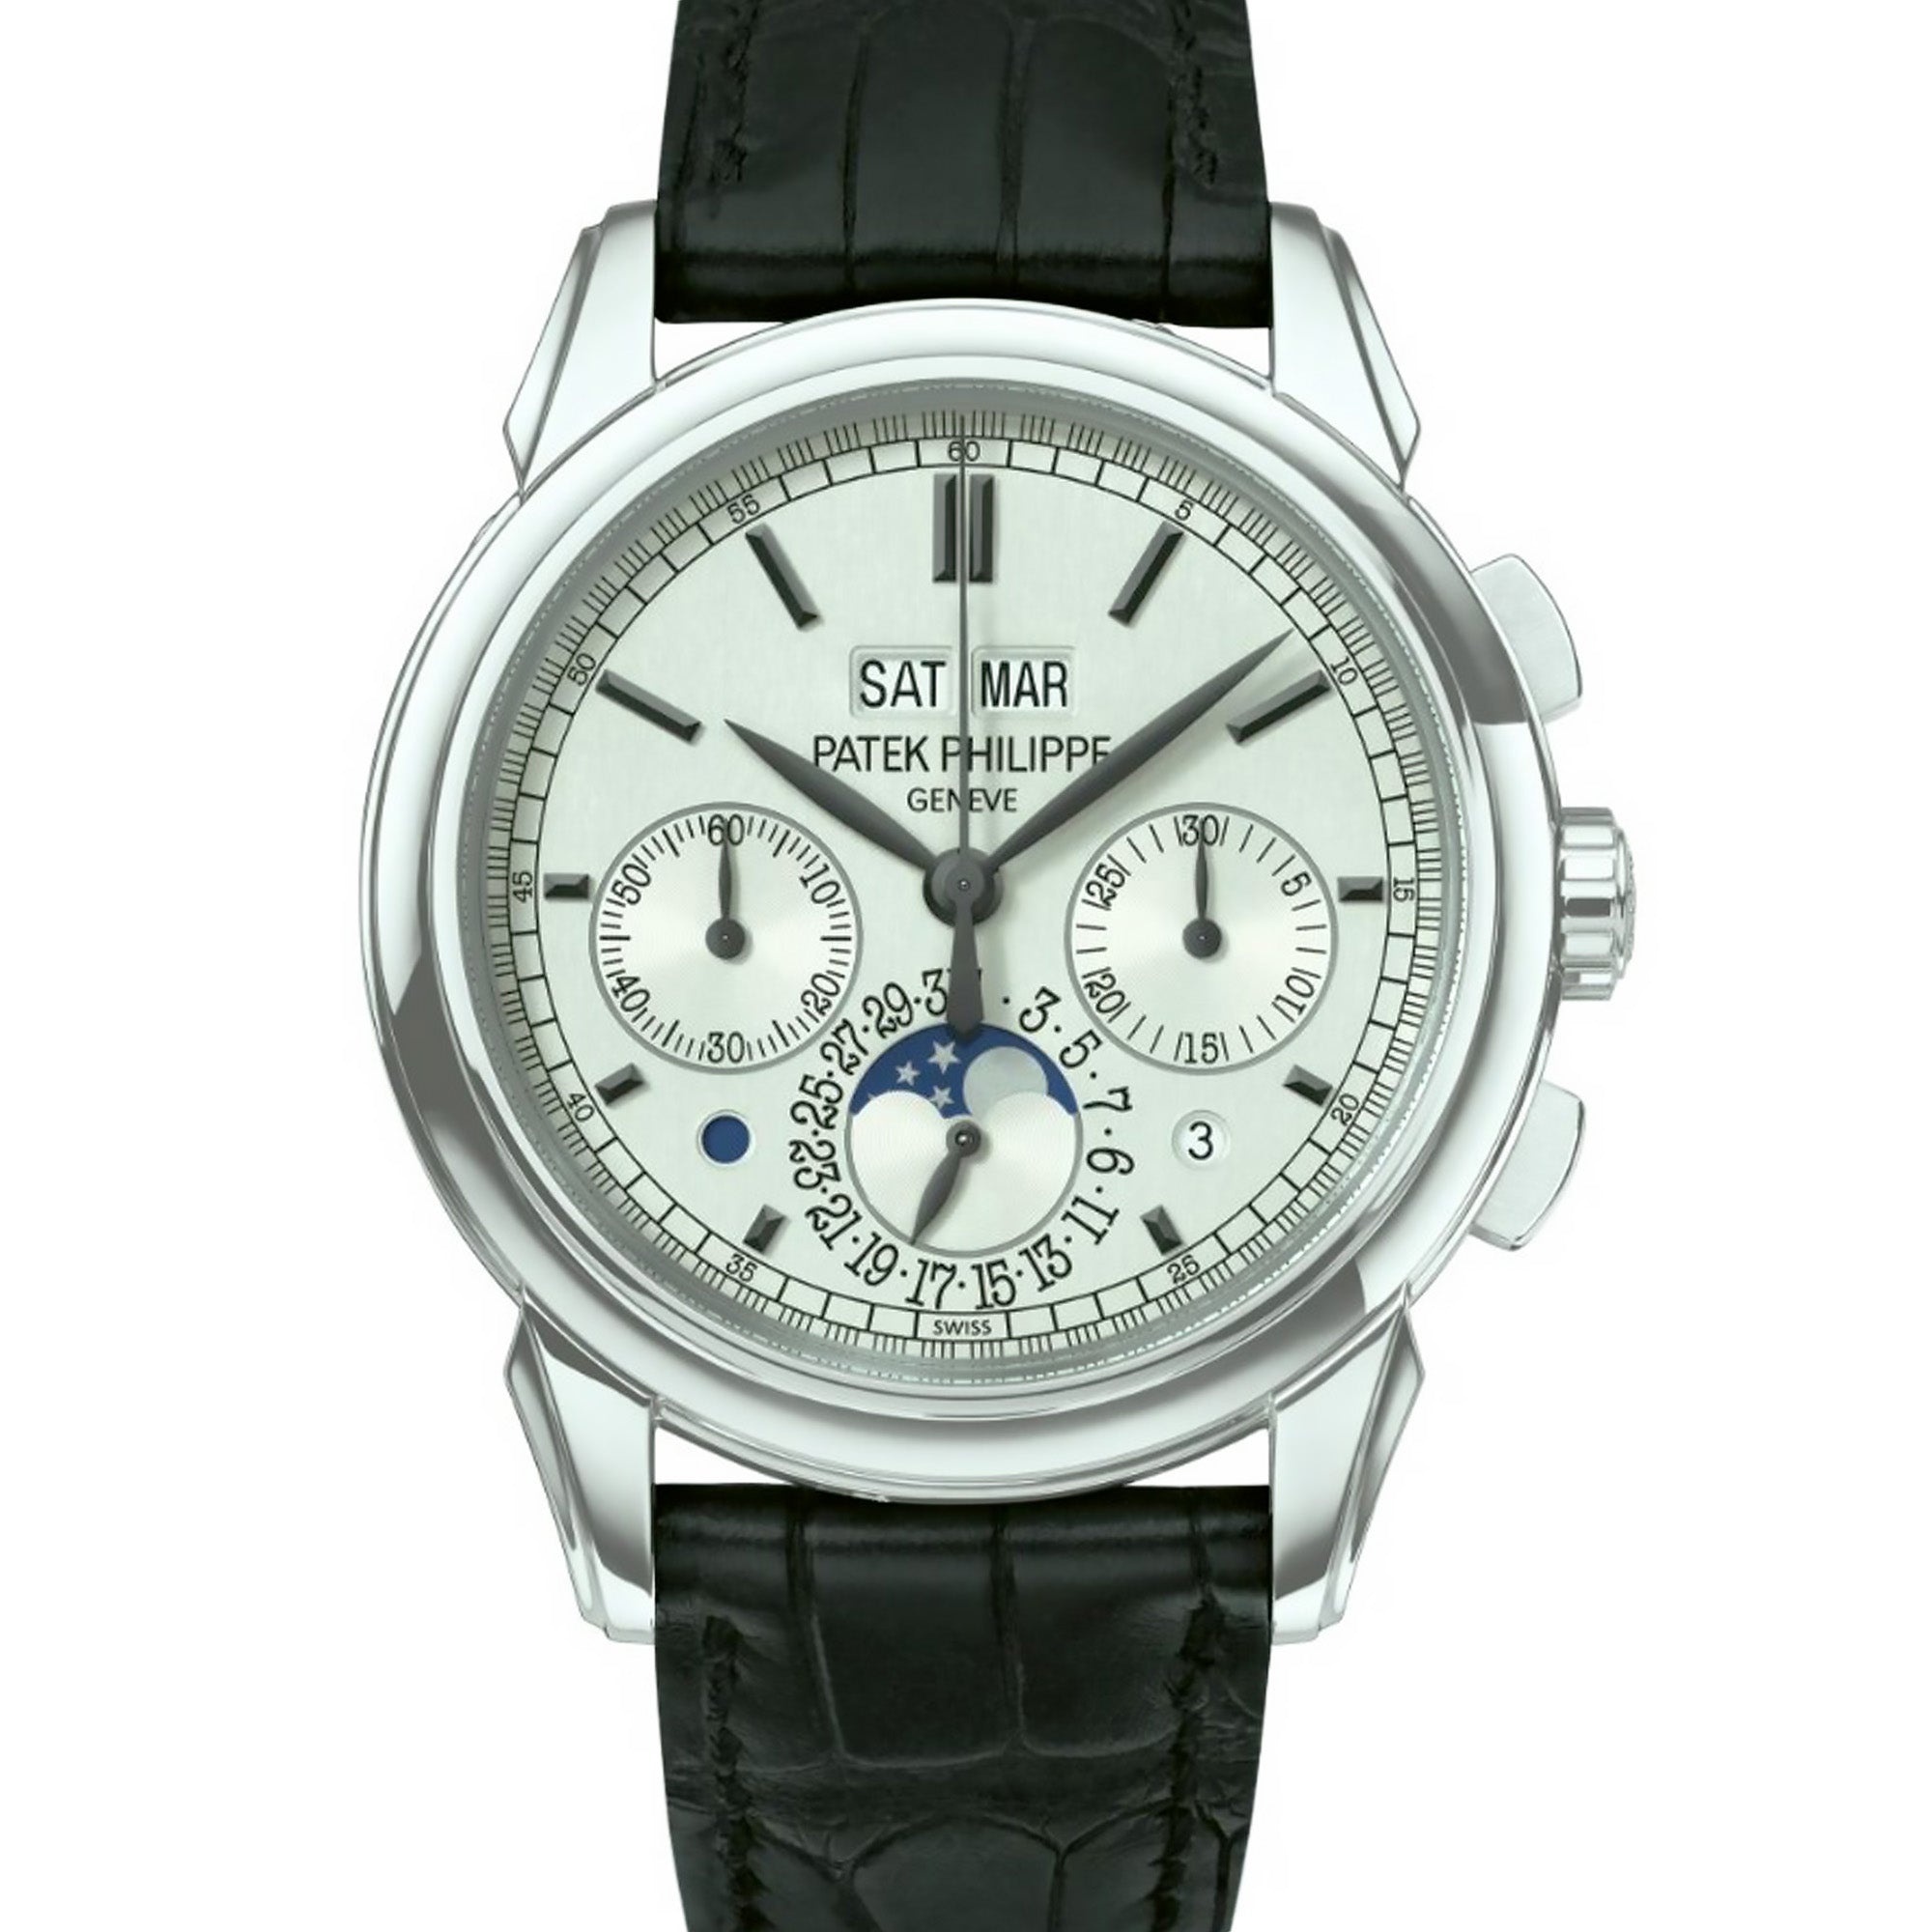 Patek Philippe - Patek Philippe White Gold Perpetual Calendar Chronograph Watch Ref. 5270, in Unworn Condition - The Keystone Watches